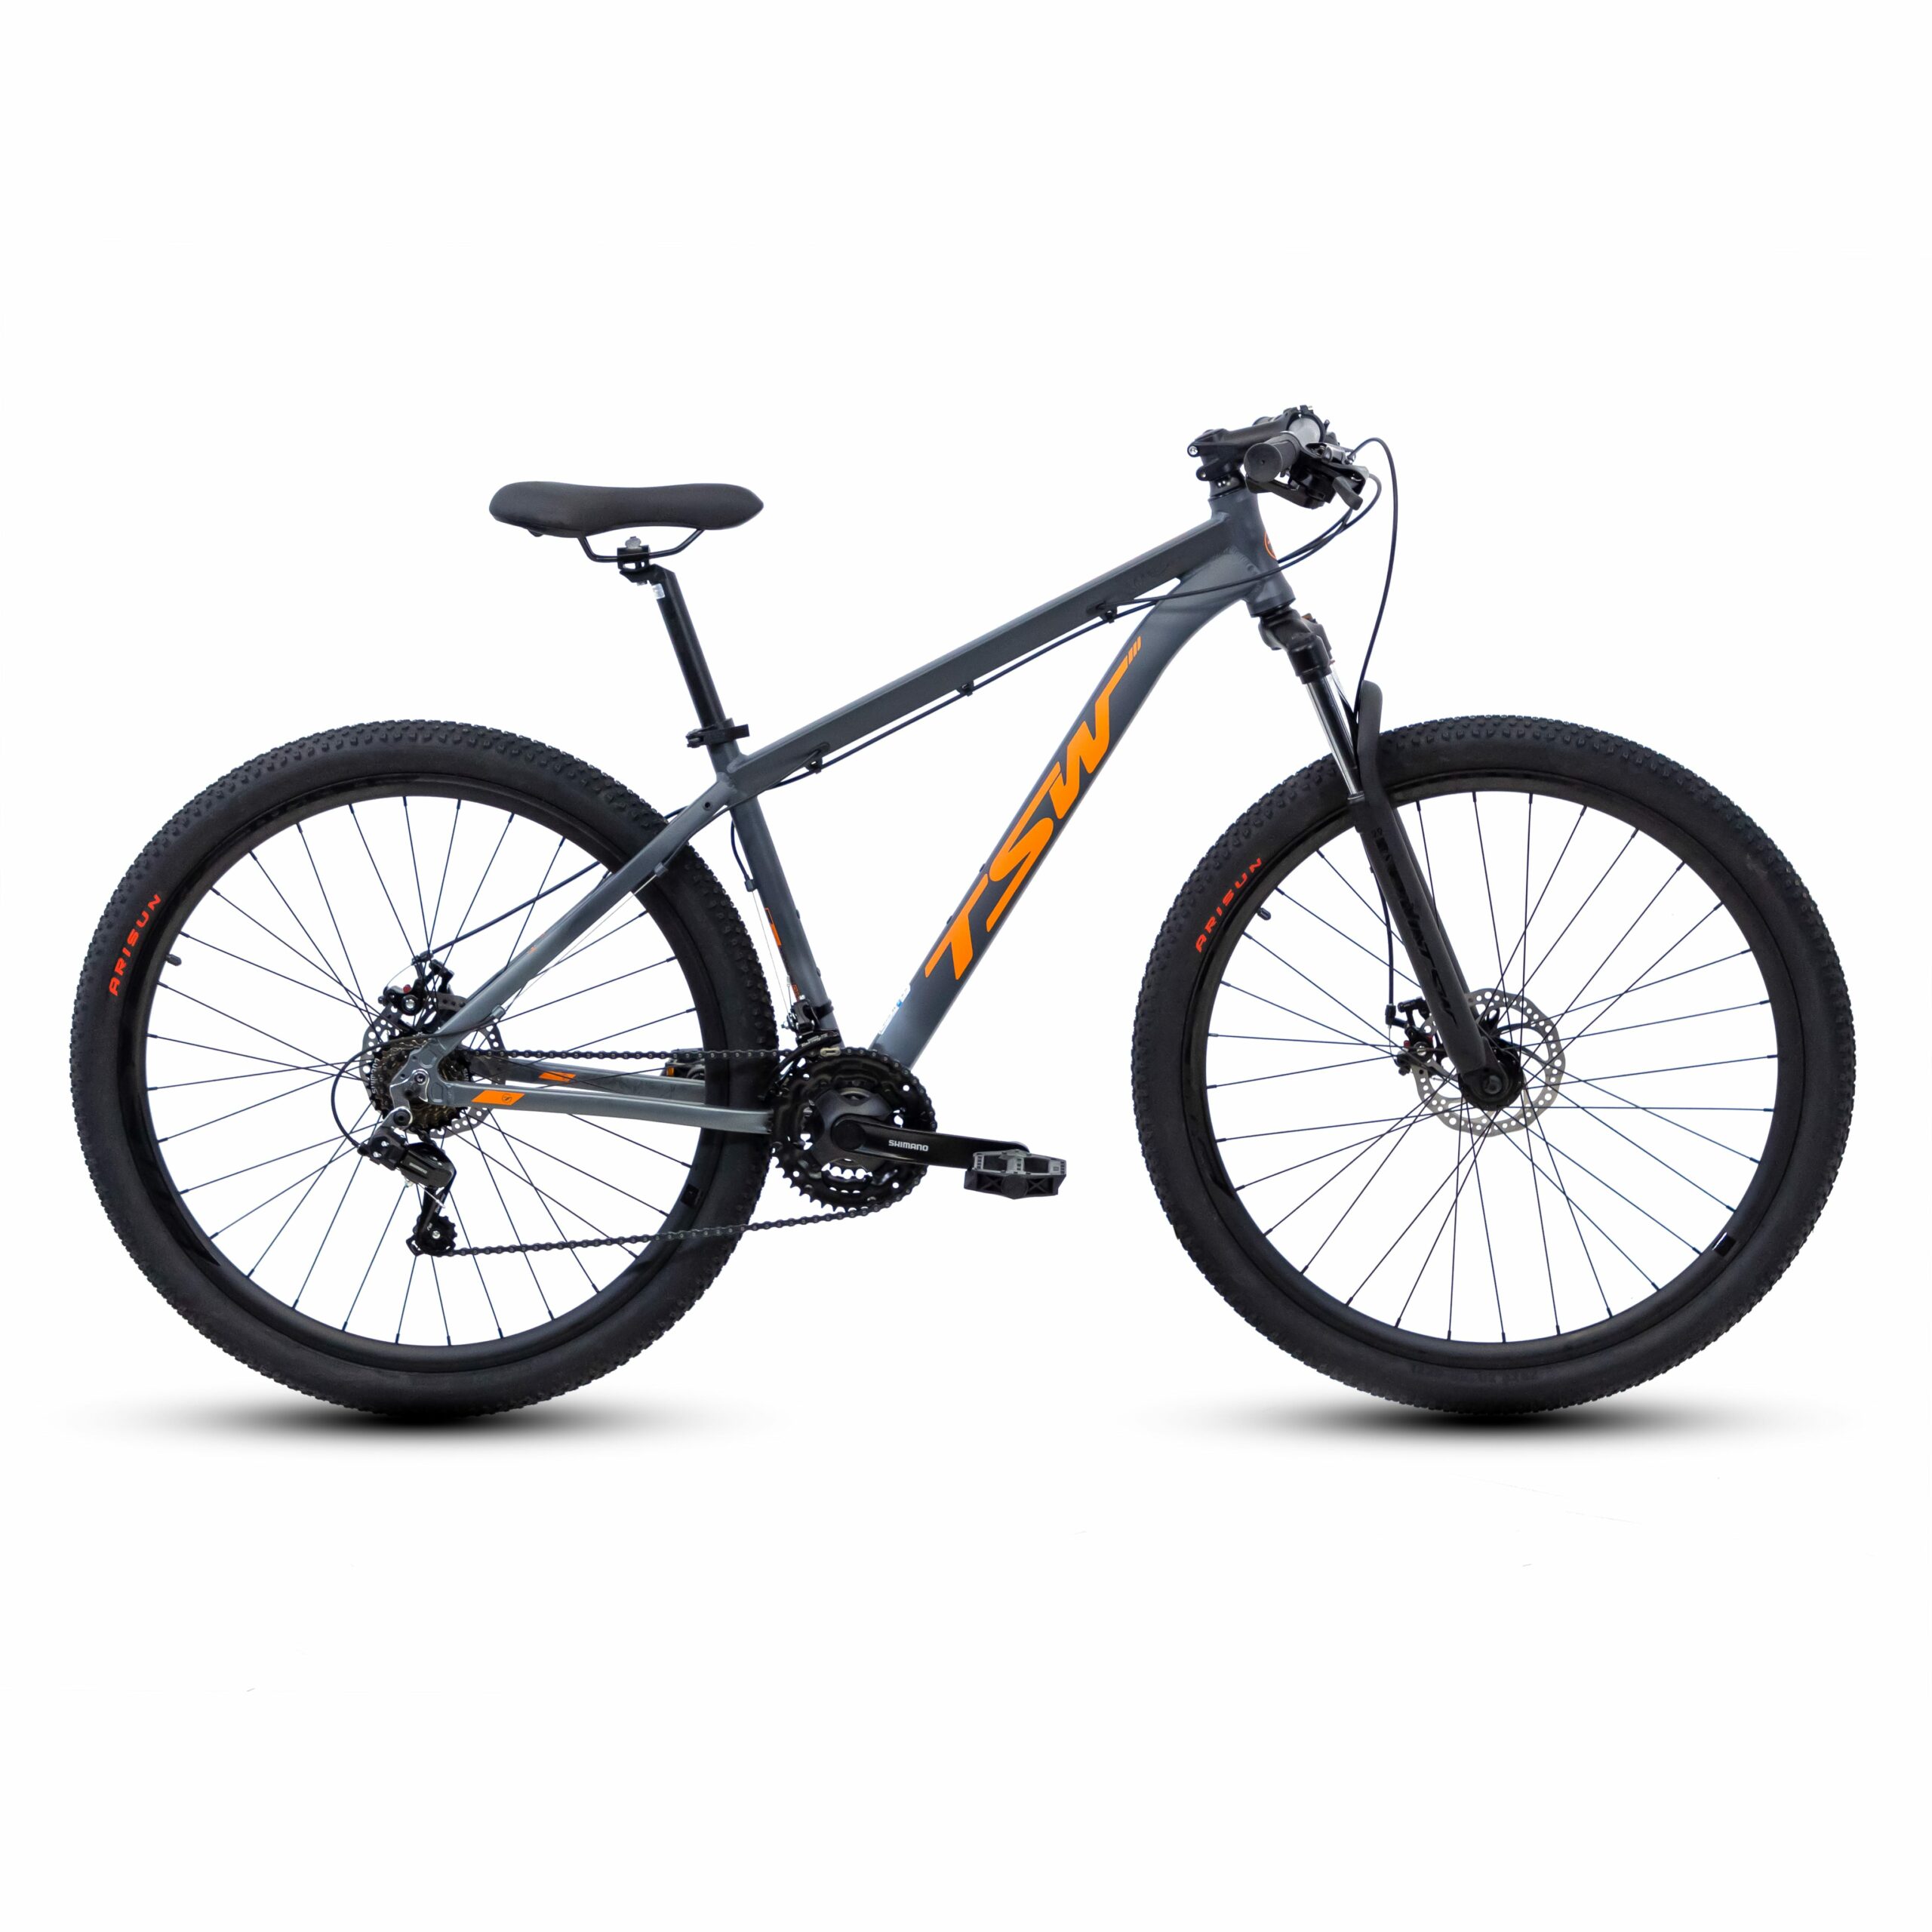 Bicicleta TSW Ride | 2021/2022 - 15.5", Cinza/Laranja